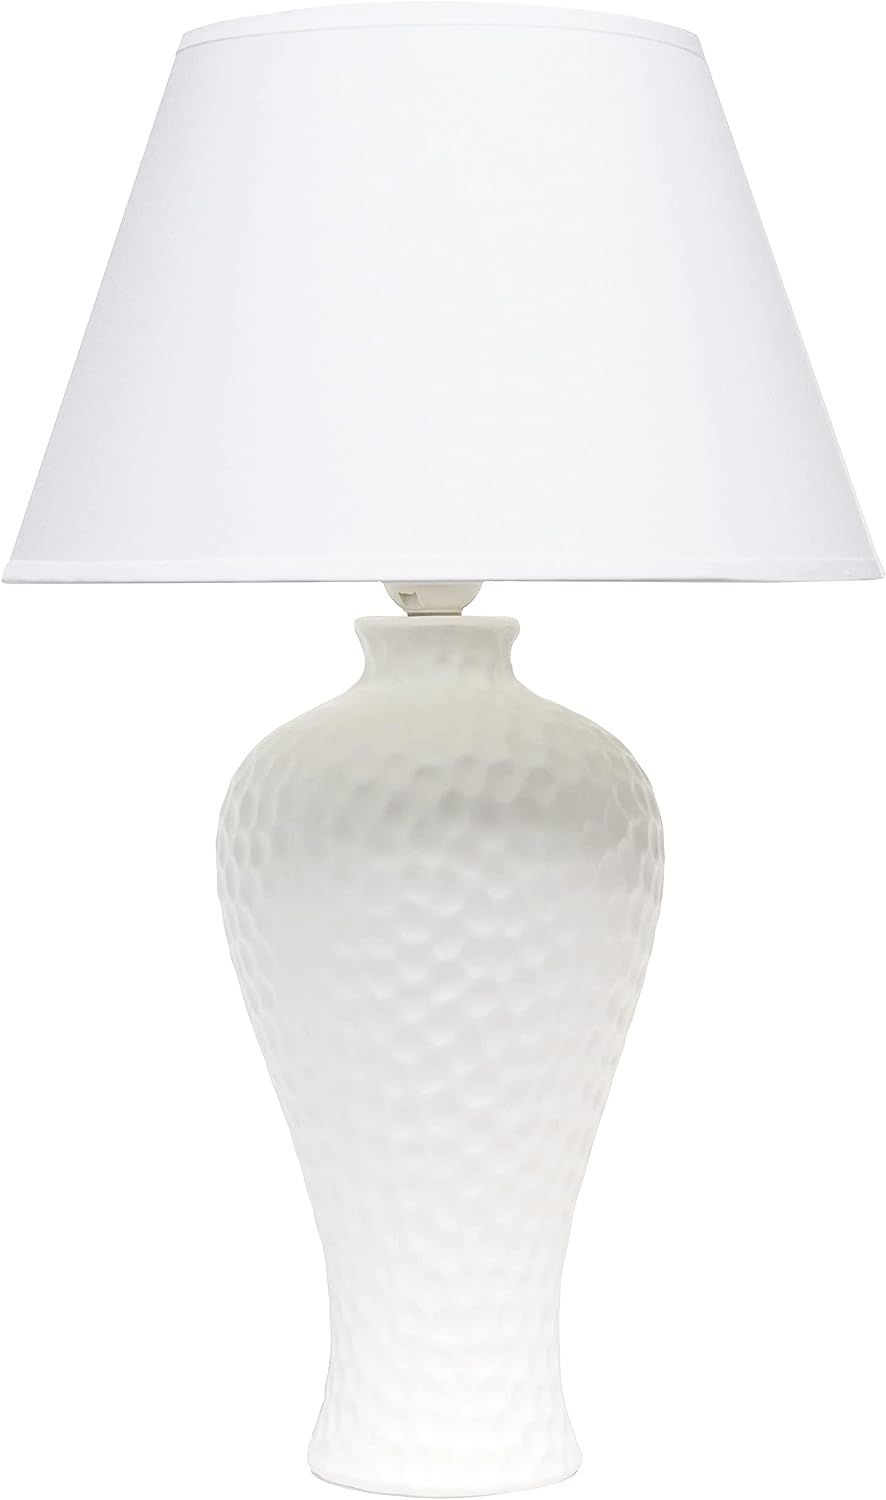 Simple Designs LT2004-WHT Hammered Stucco Curvy Ceramic Table Lamp, White | Amazon (US)